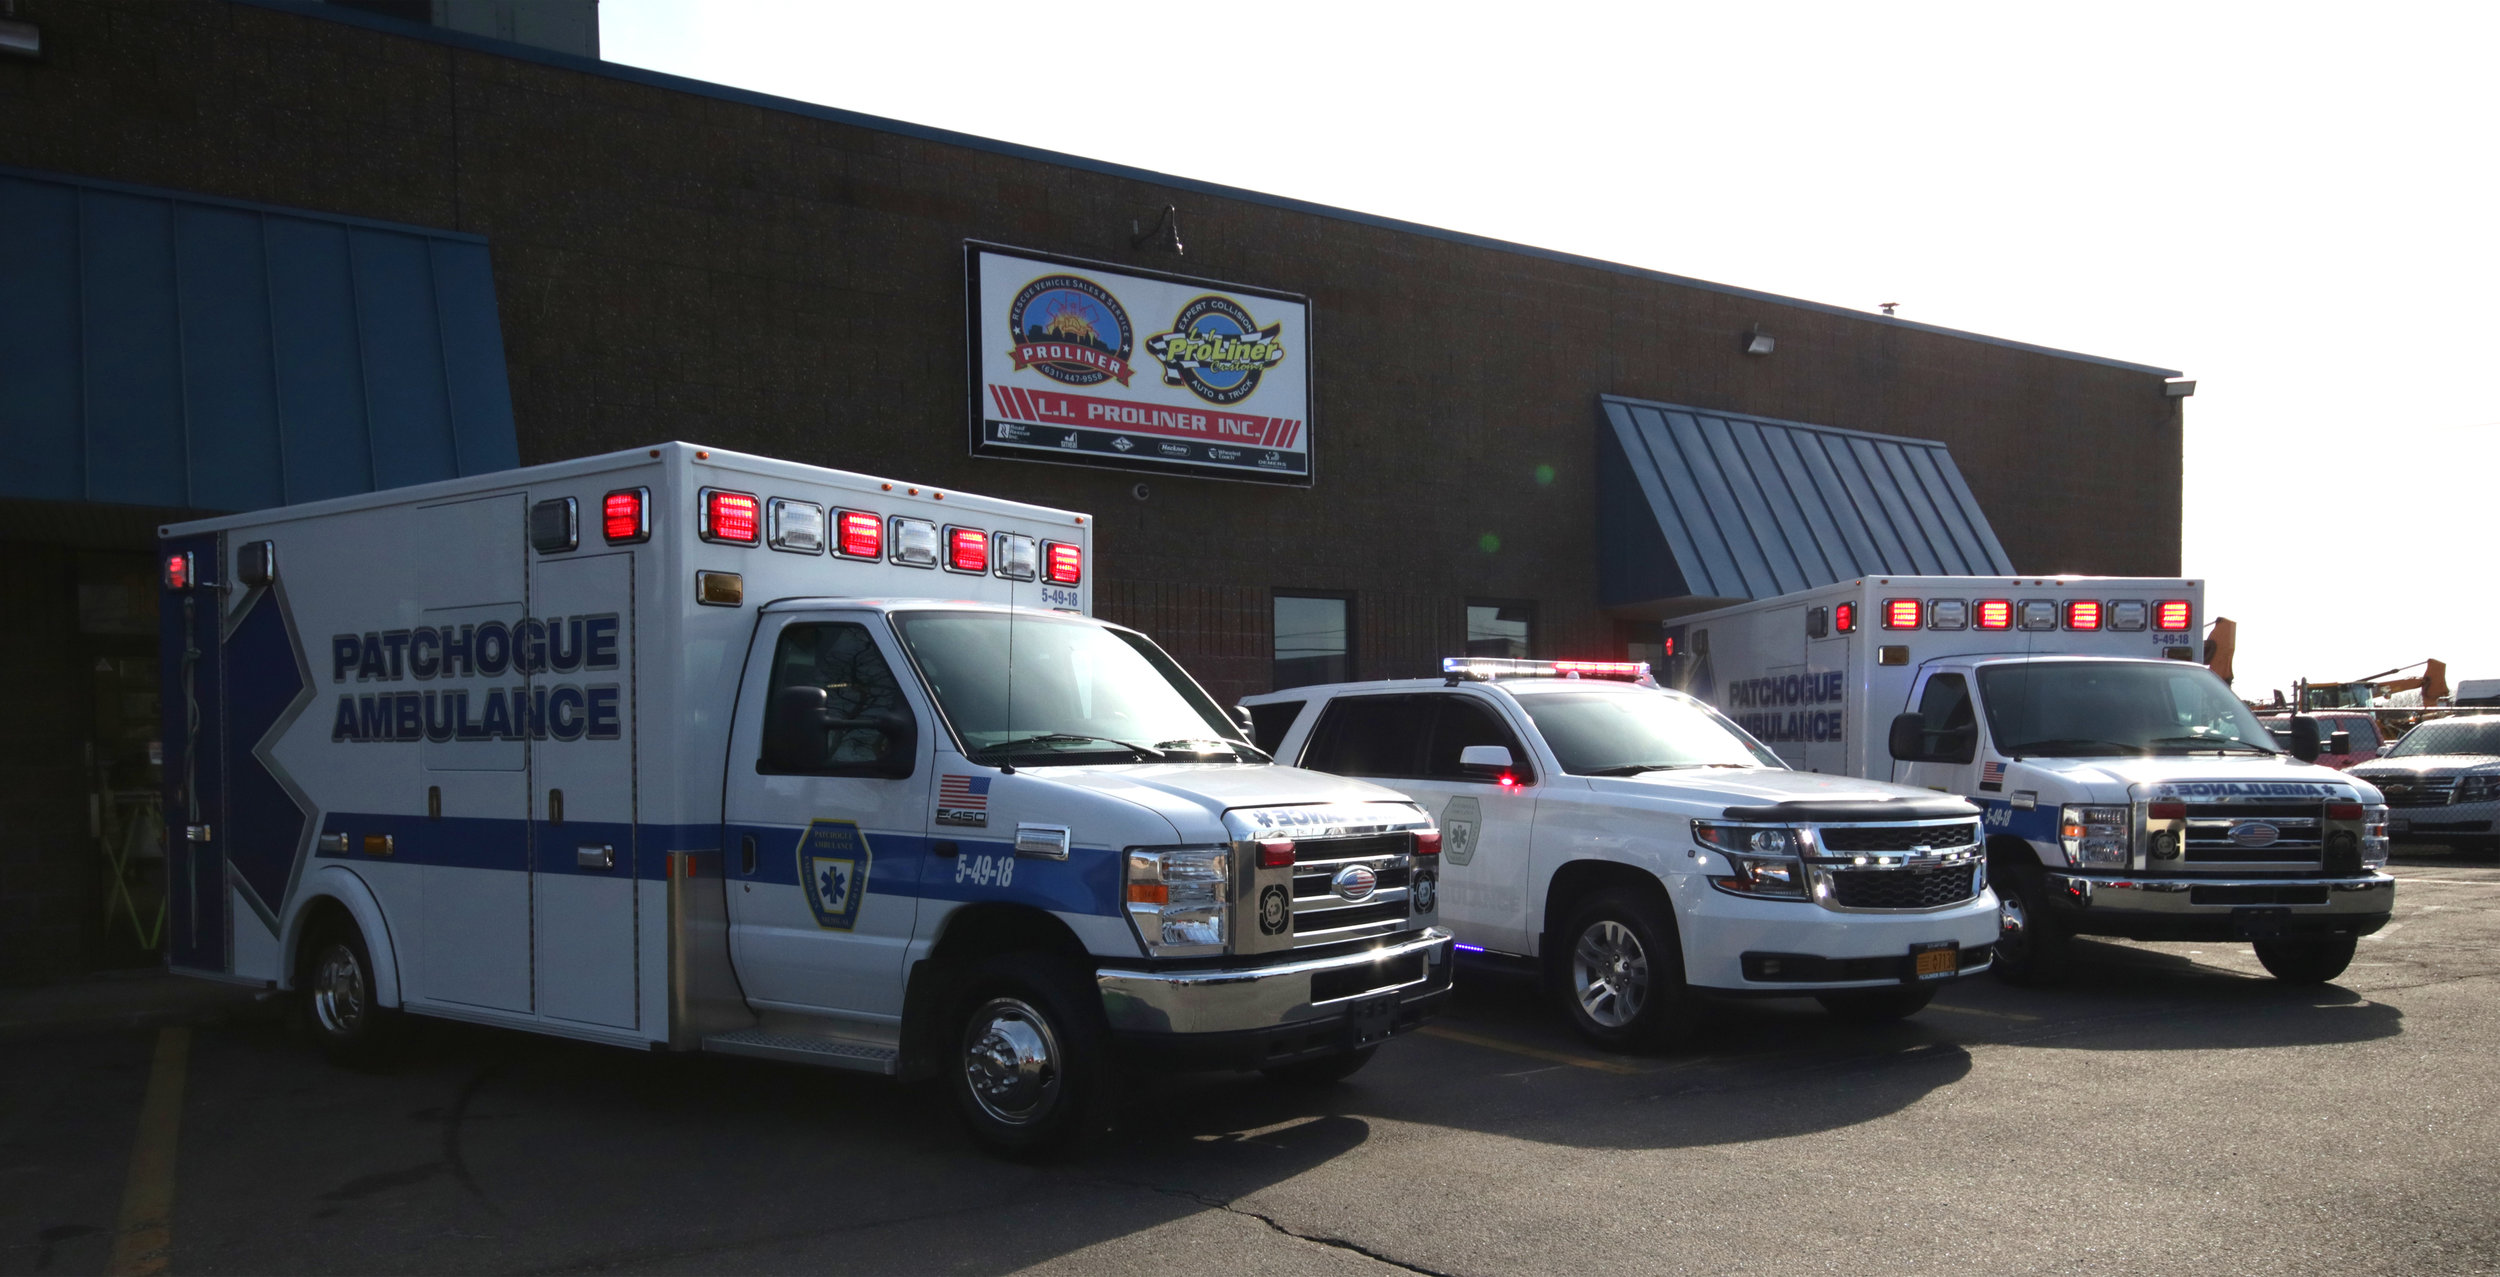 Patchogue Ambulance — Proliner Rescue